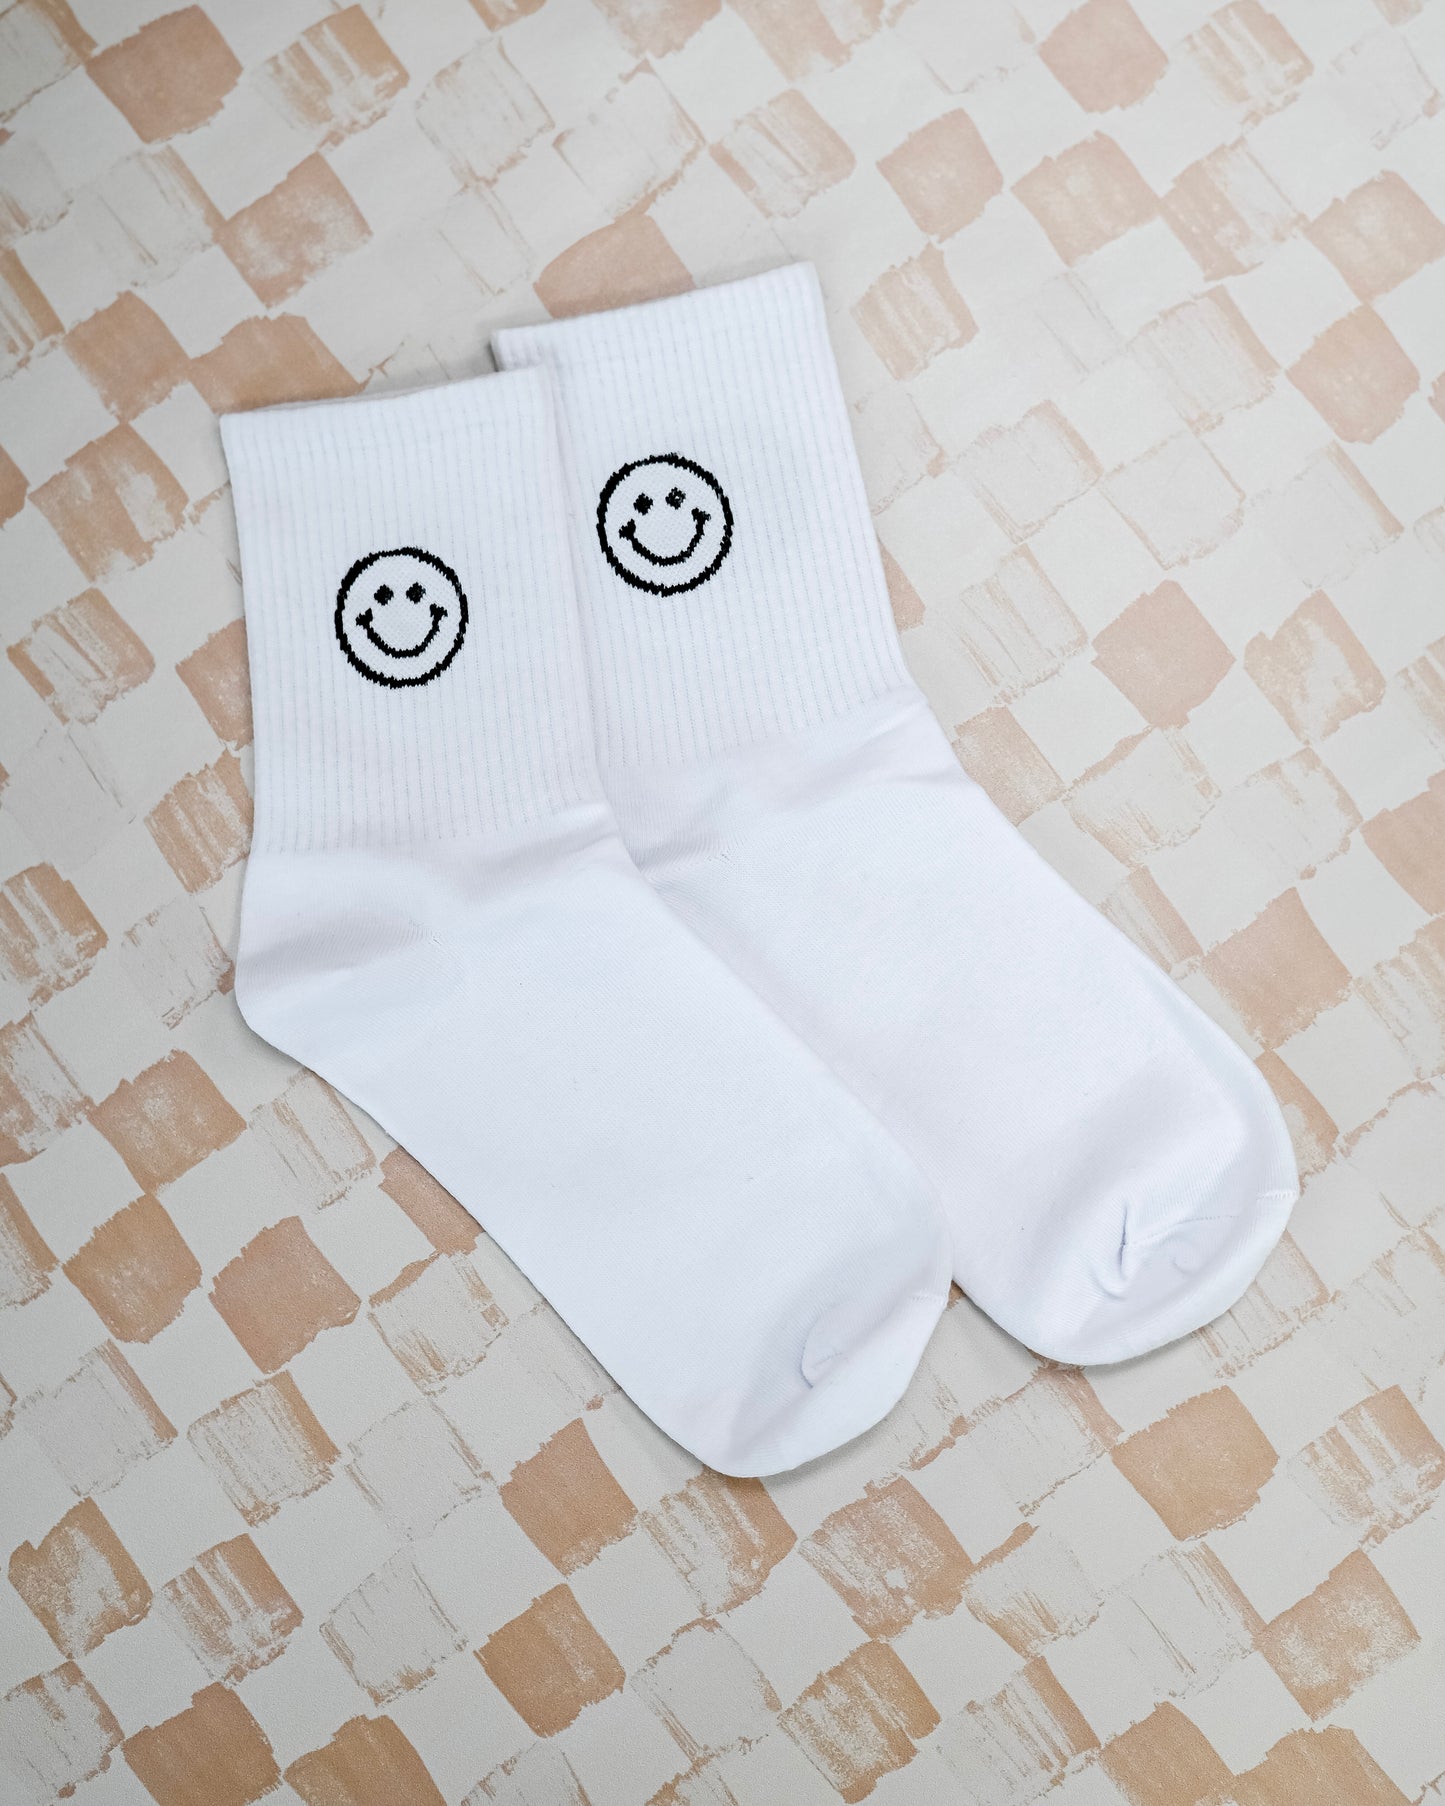 Basics Smiley Crew Socks